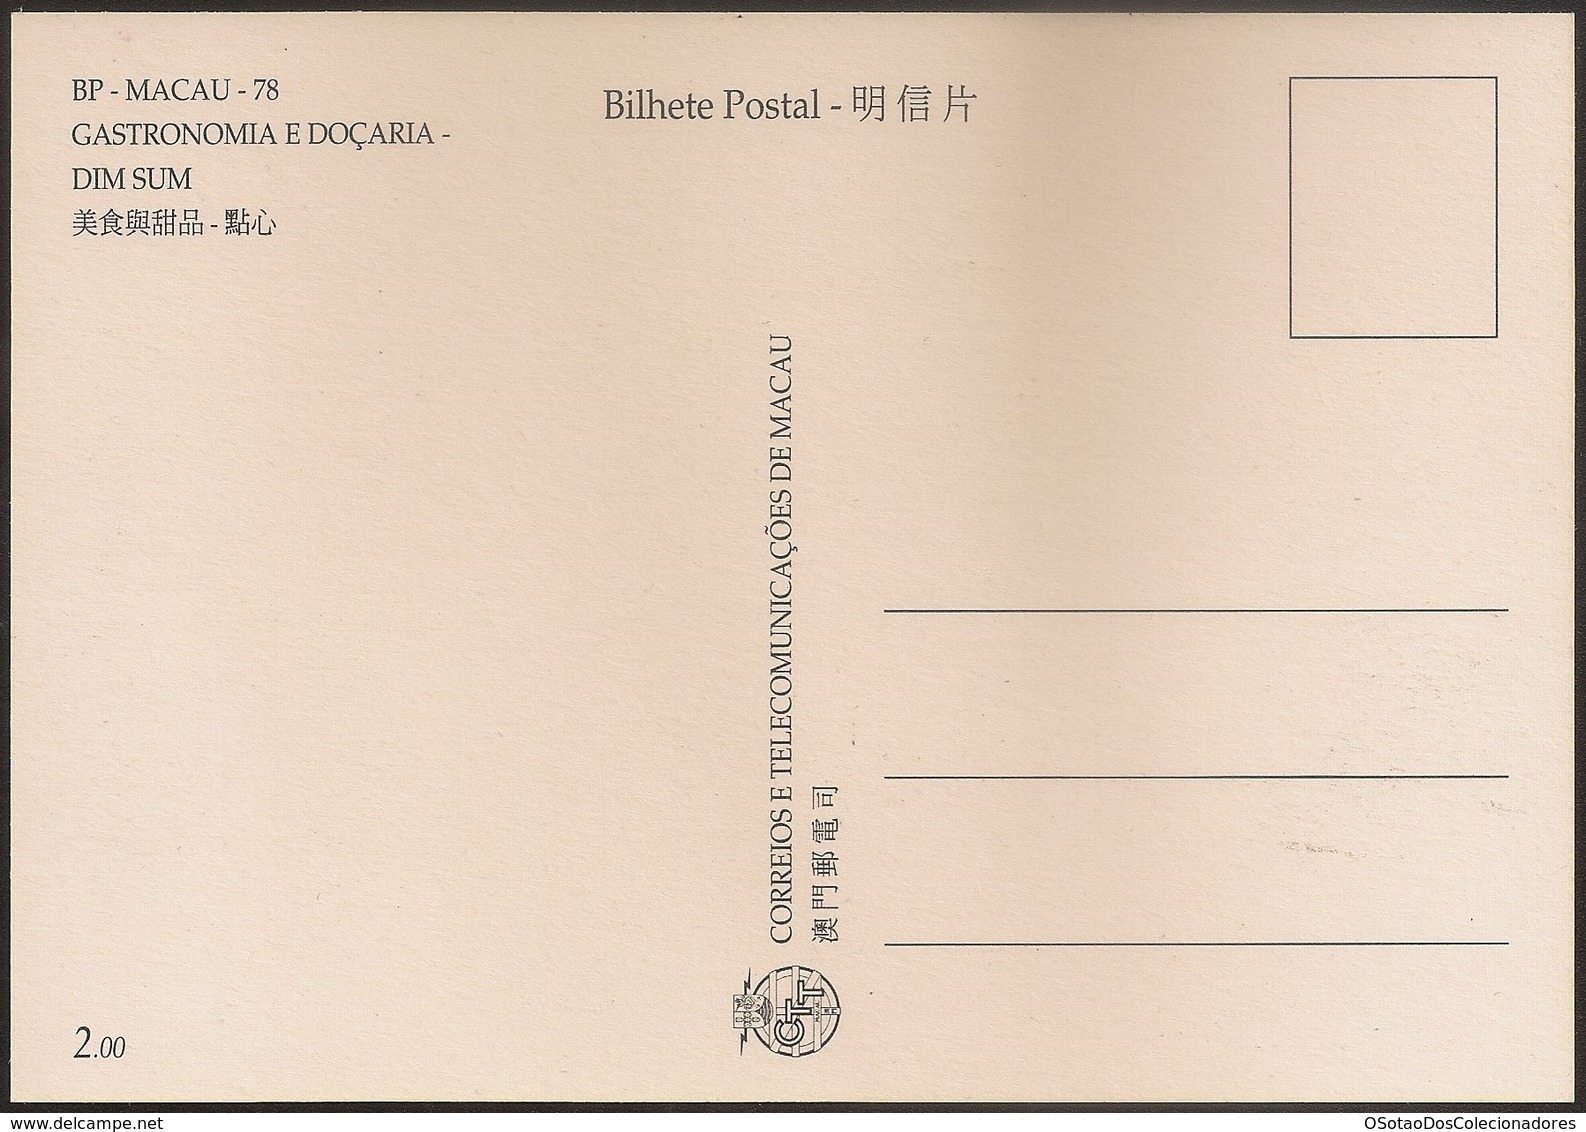 POSTAL MAXIMO - MAXIMUM CARD - Macau Macao China Portugal 1999 - Gastronomia E Doçaria - Dim Sum - Gastronomy And Sweets - Postal Stationery